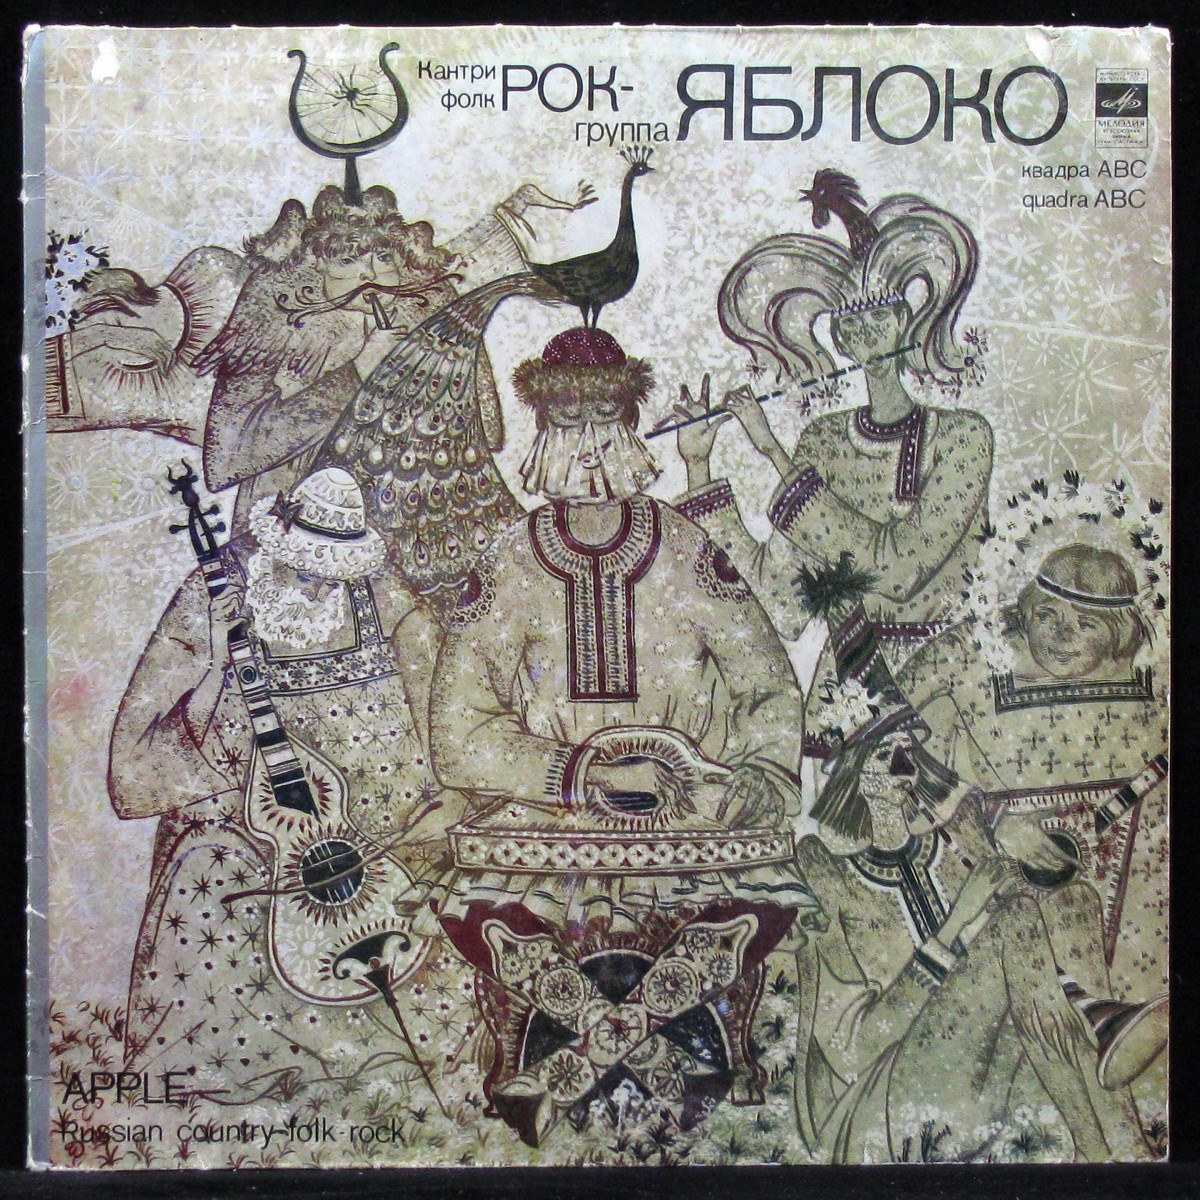 LP Яблоко — Кантри-Фолк-Рок-Группа 'Яблоко' фото